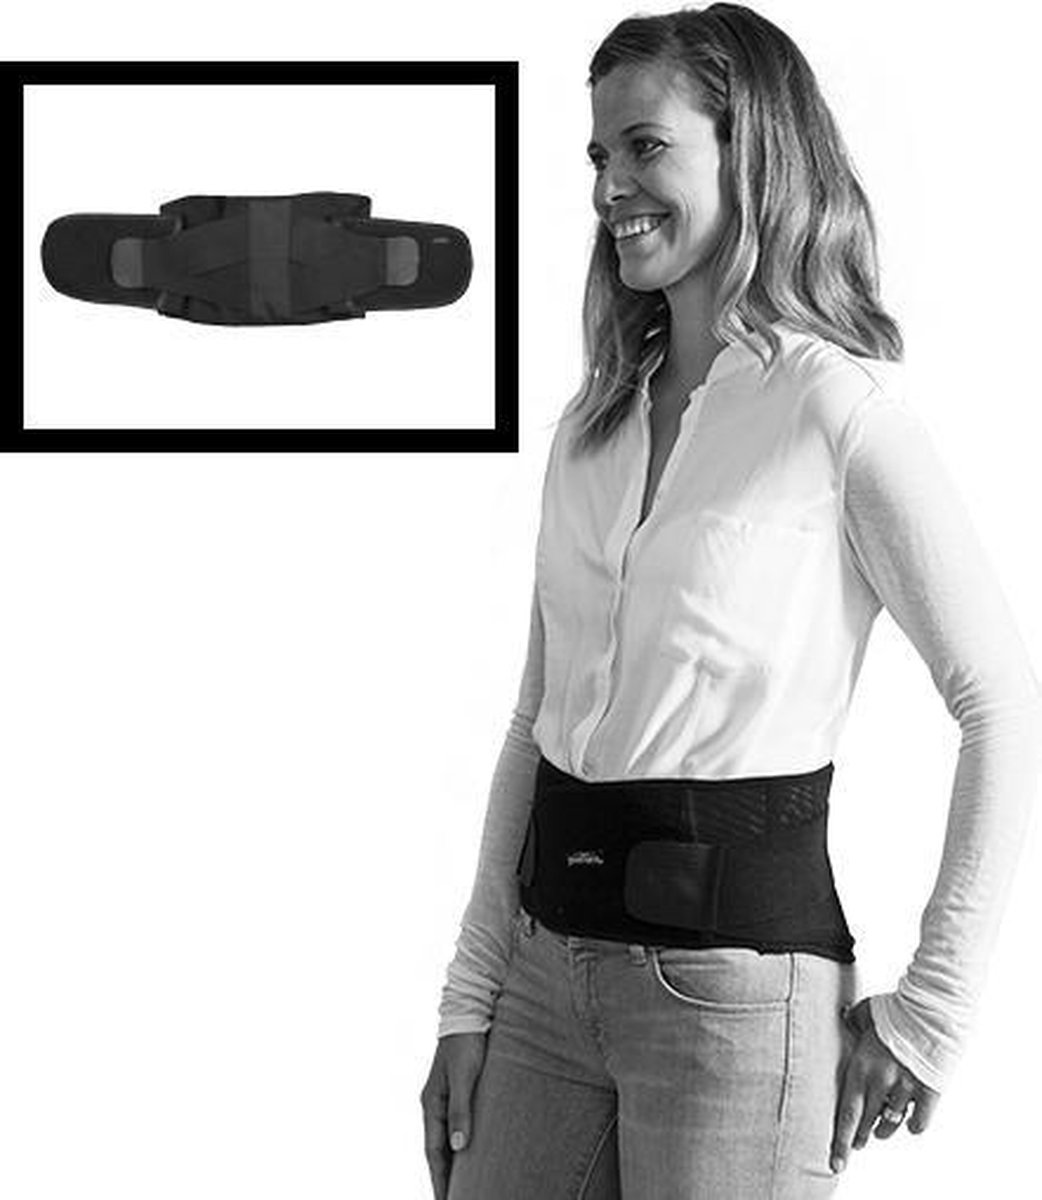 Swedish Posture - Stabilize Belt - Lumbar Back - Maat M Zwart